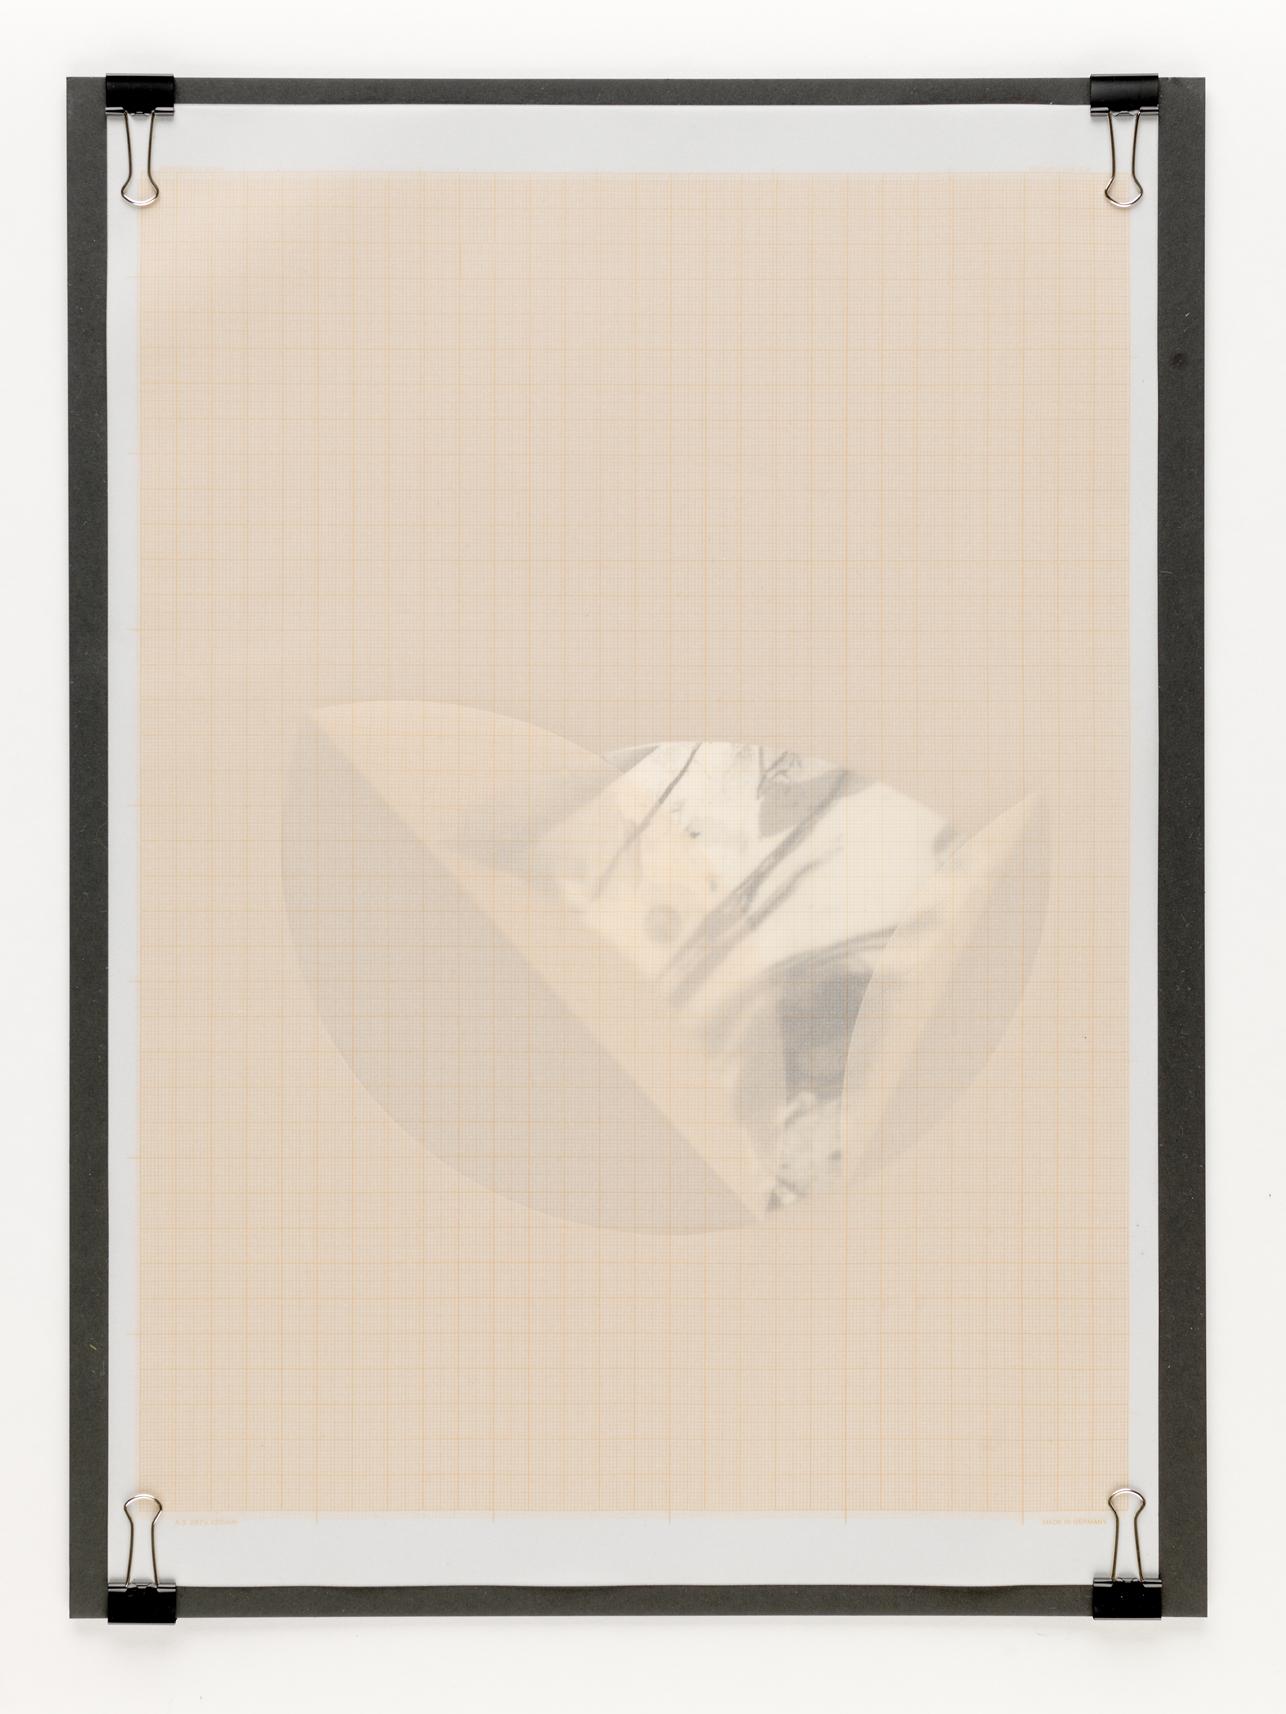 Chaos and Order 1 // Millimeterpapier, transparent // Karton // 43 x 32 cm // 2017